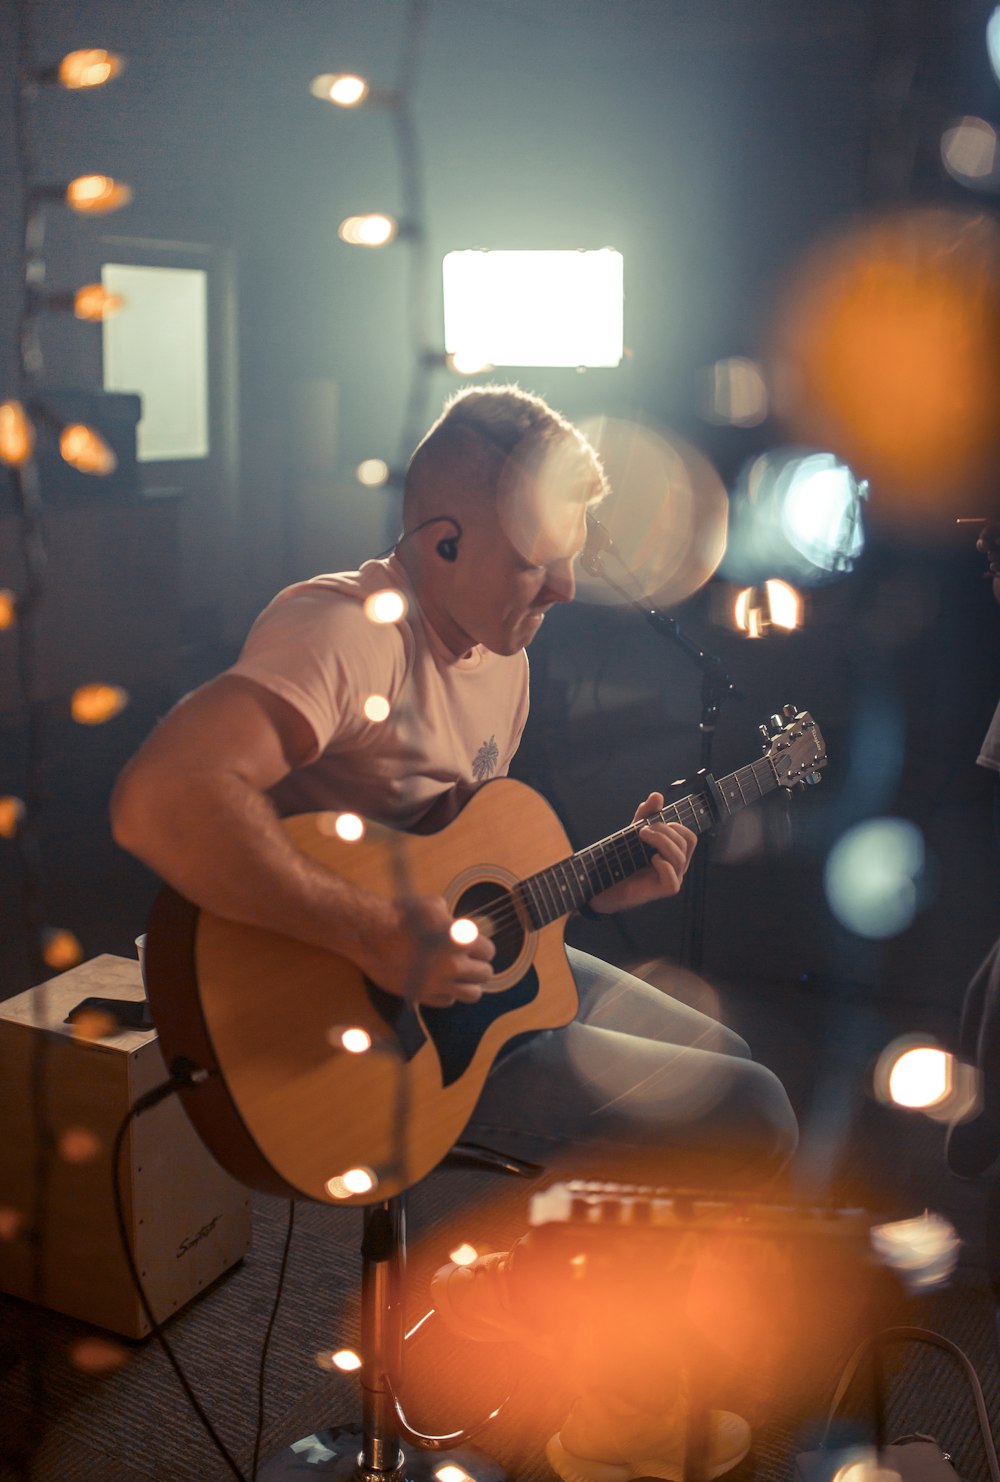 bokeh photography of man playing guitar